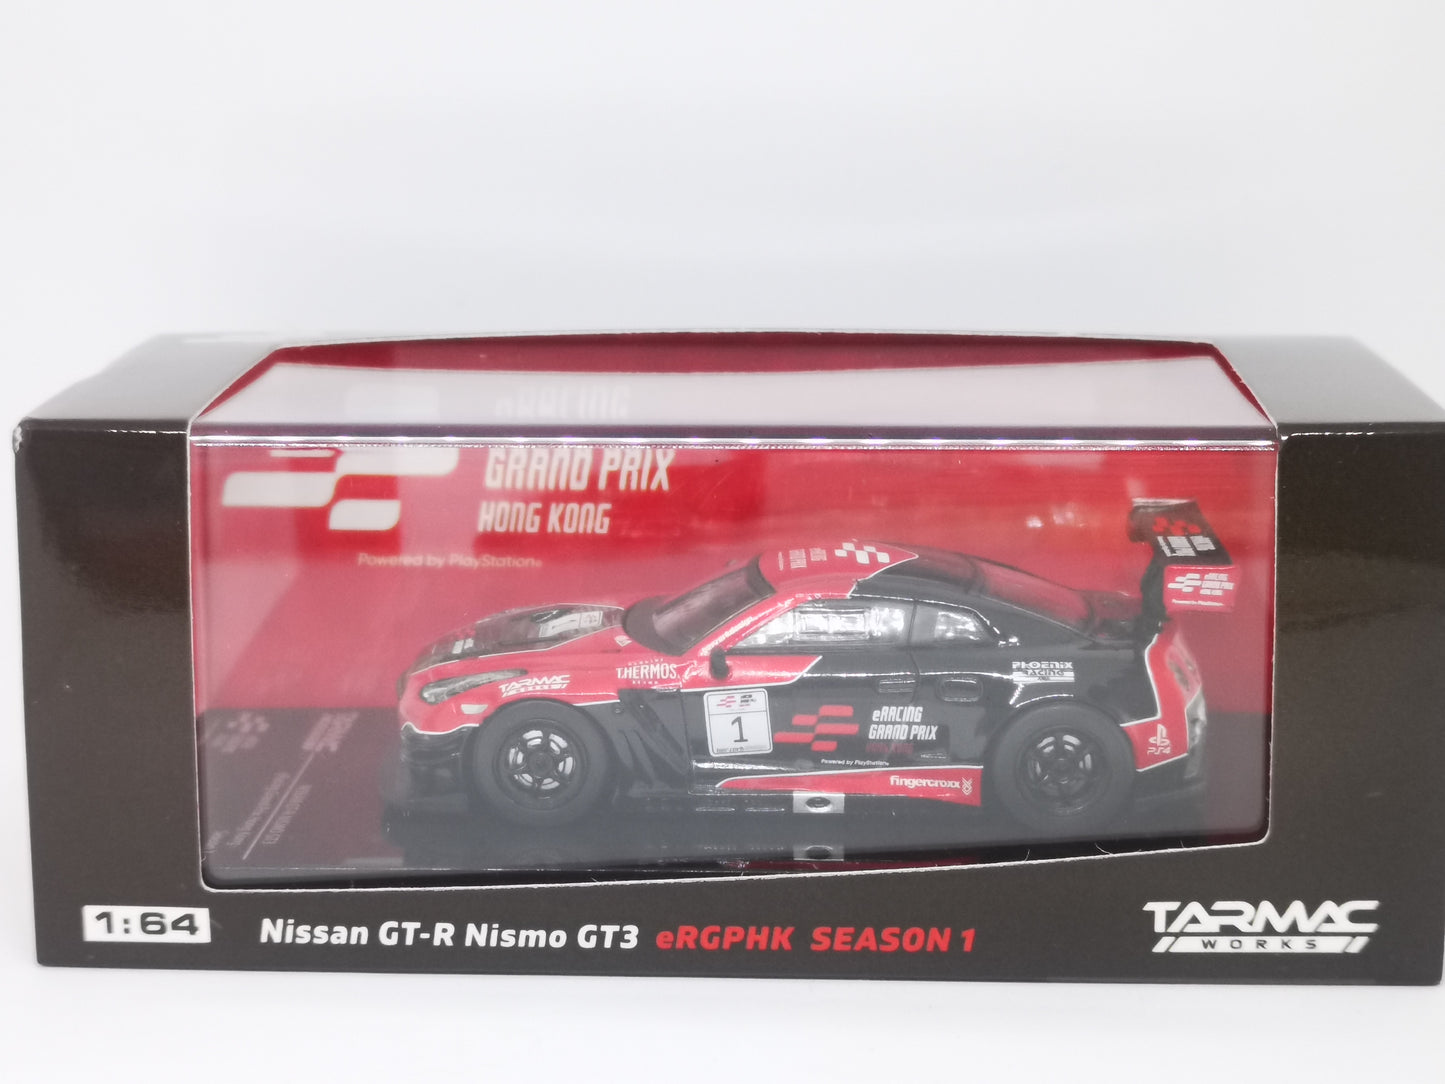 Tarmacworks Nissan Nismo GT-R GT3
eRacing GP Hong Kong Season 1